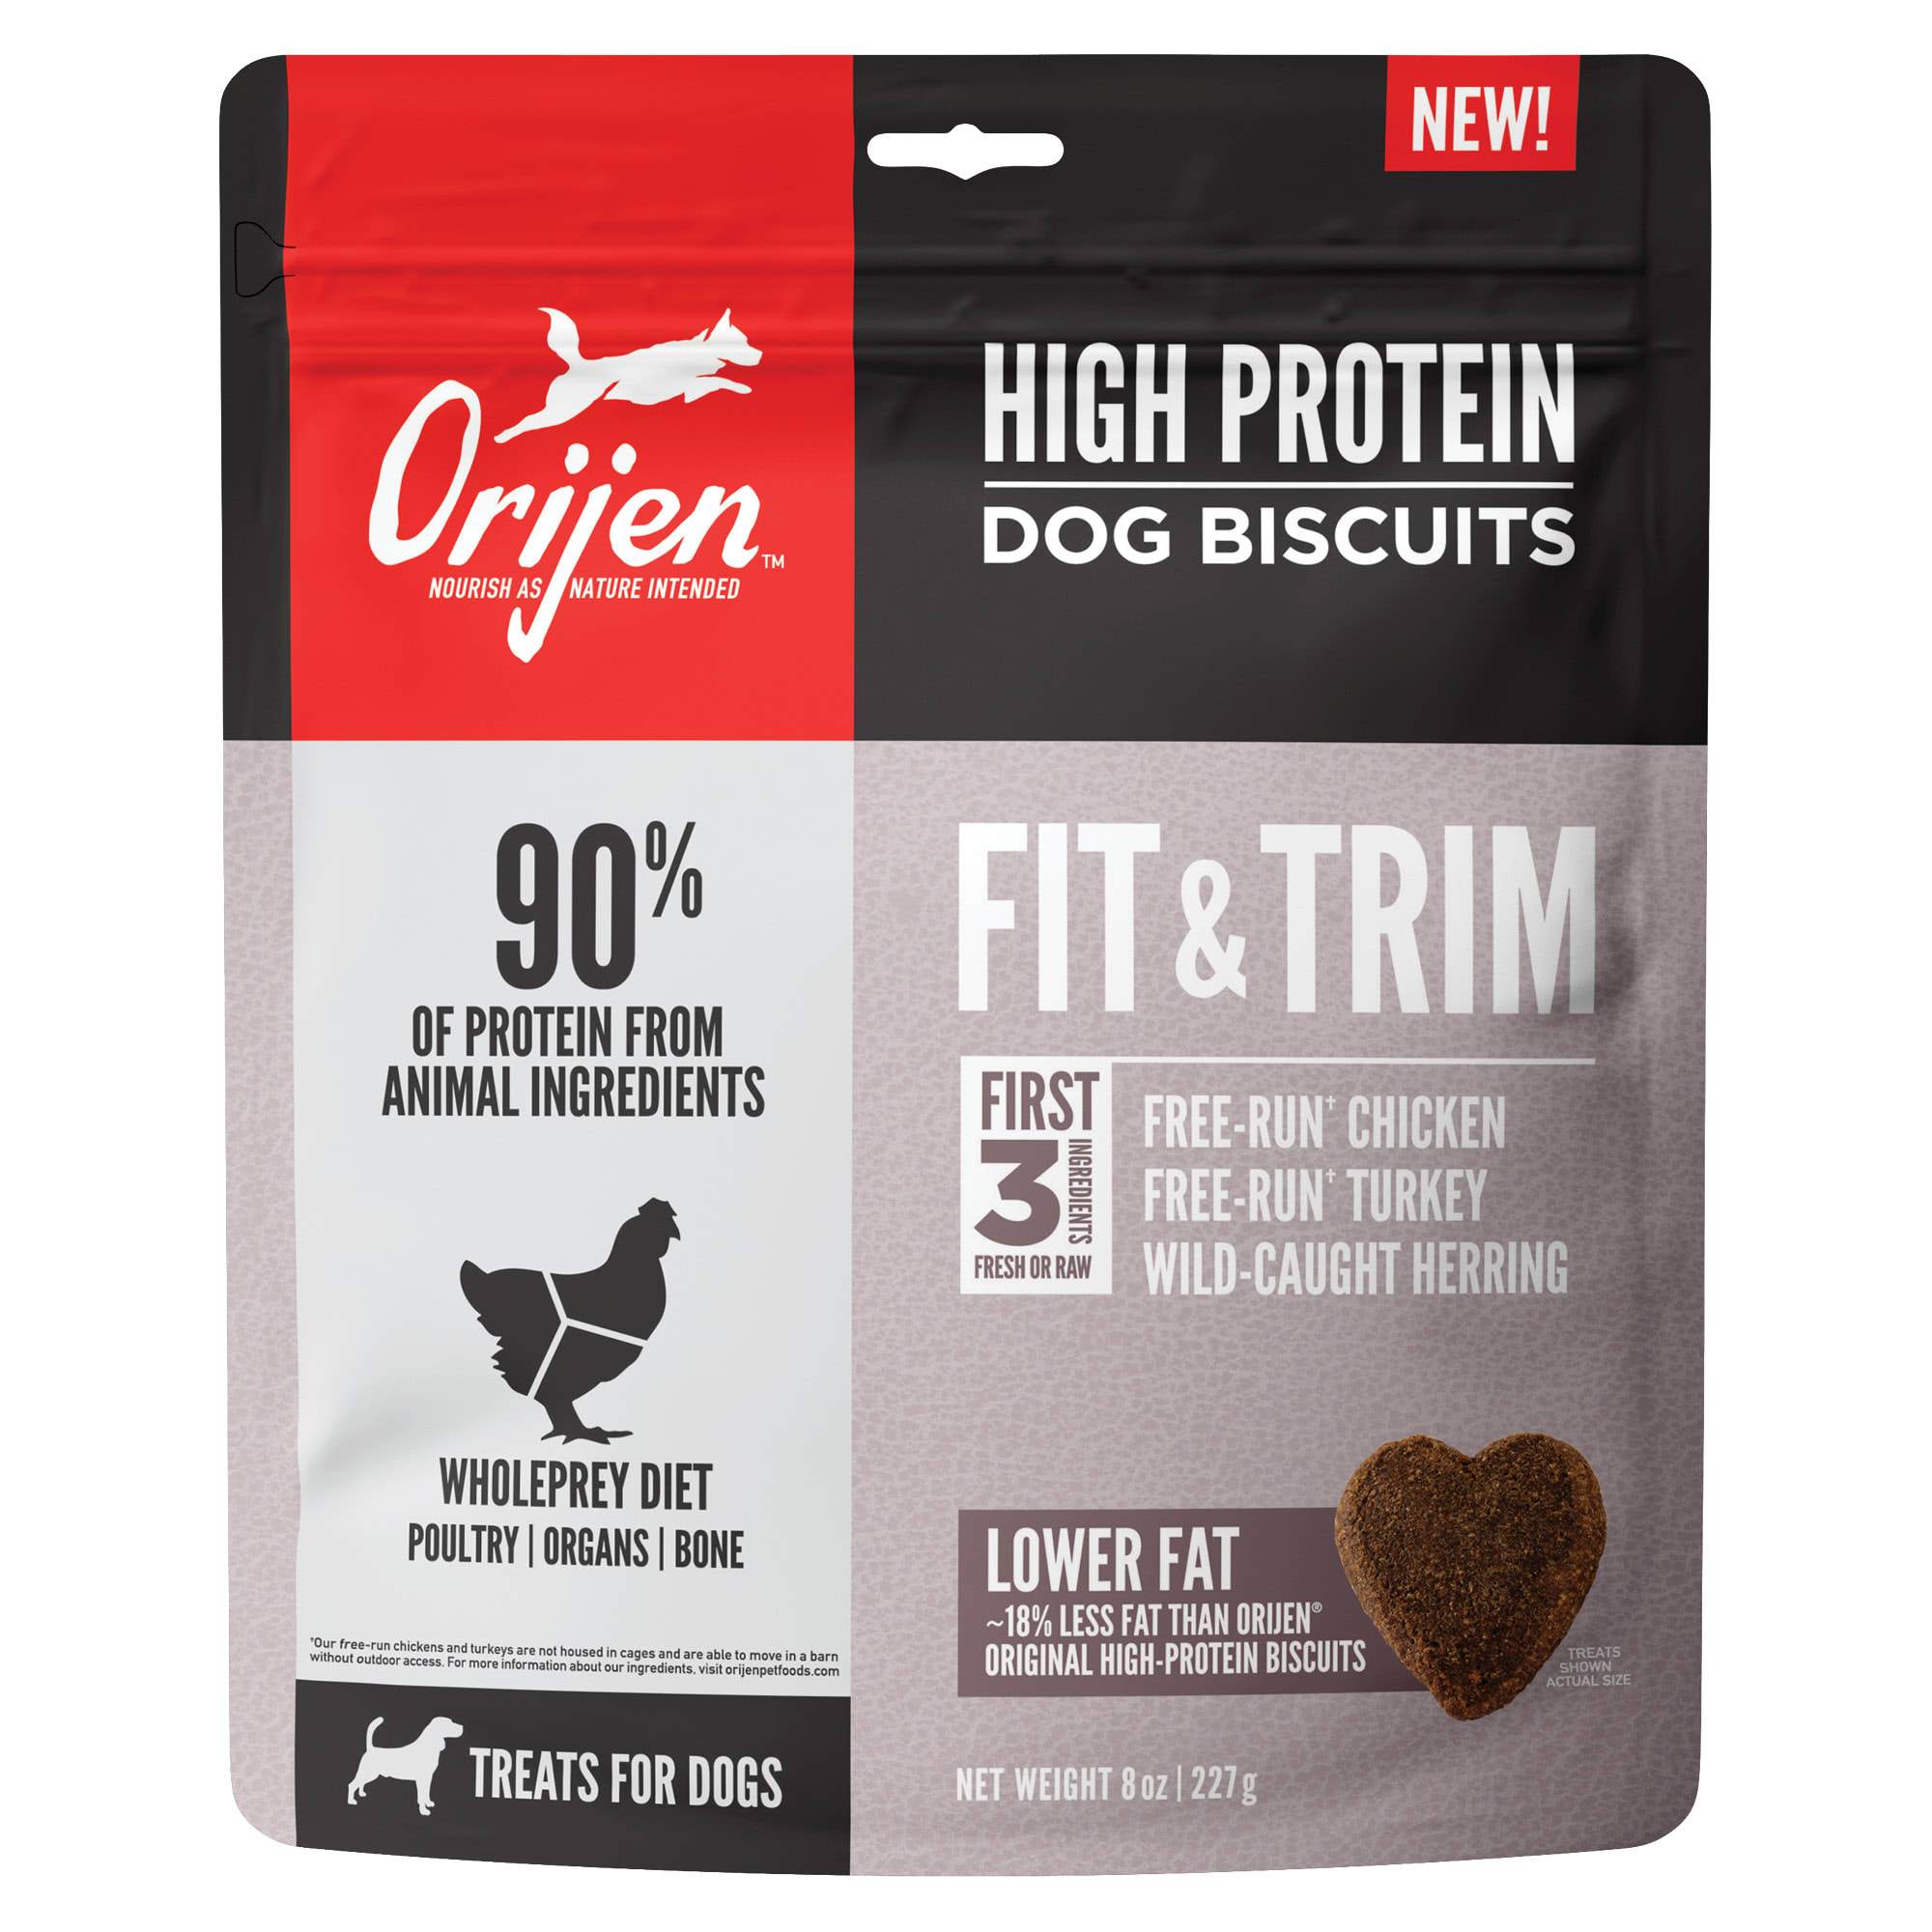 Orijen 'Kentucky Dogstar Chicken' Biscuits Fit & Trim Dog Biscuits - 8 oz Bag  